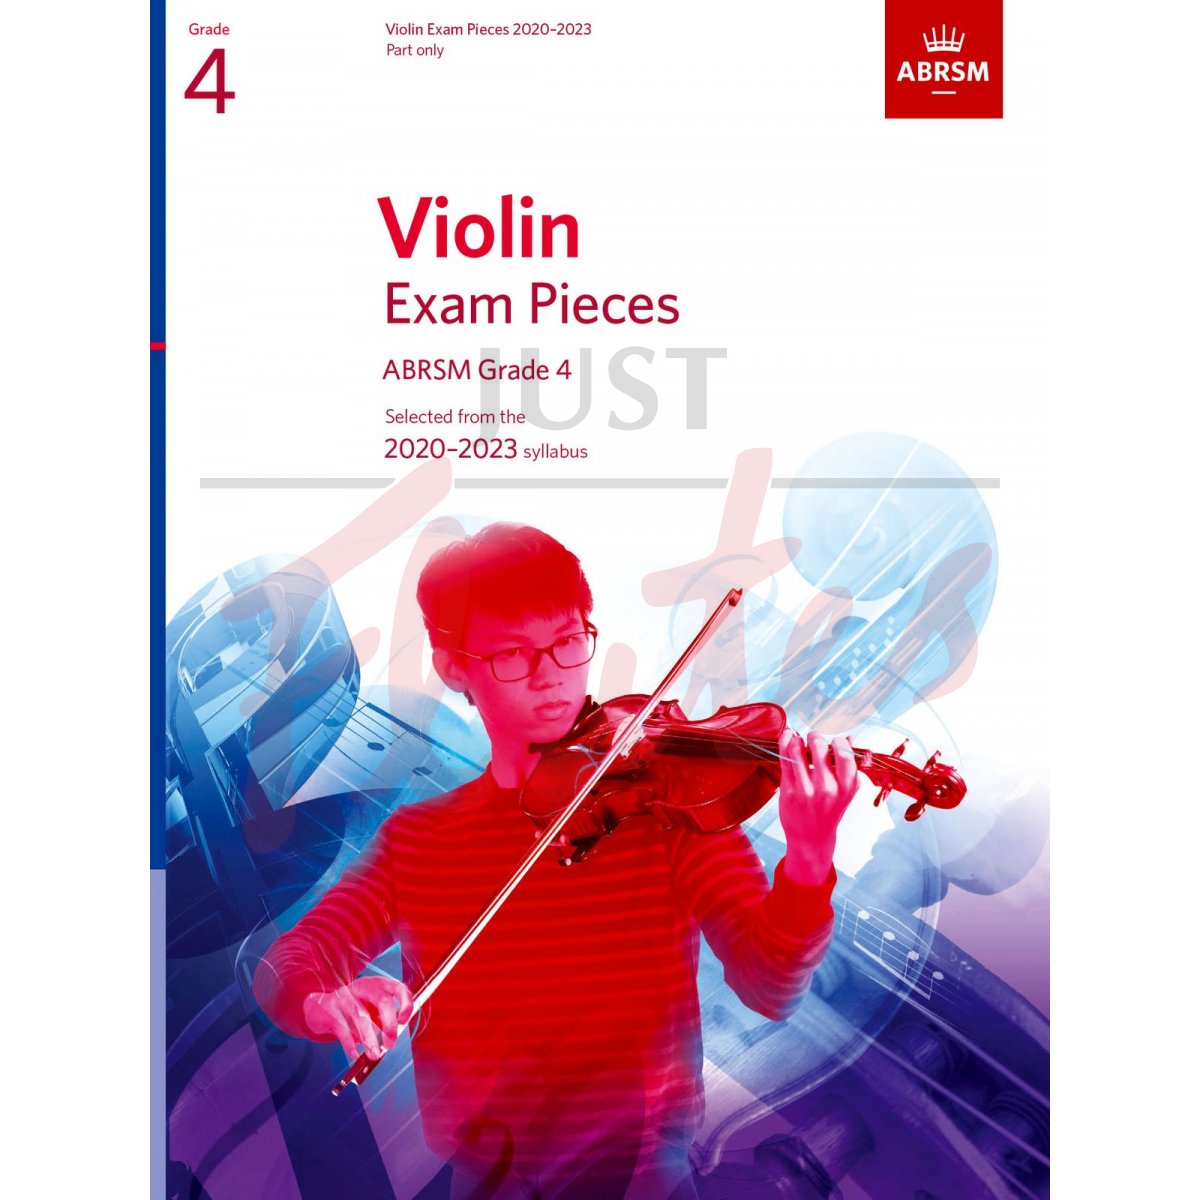 Violin Exam Pieces 2020-2023, Grade 4 [Part Only]